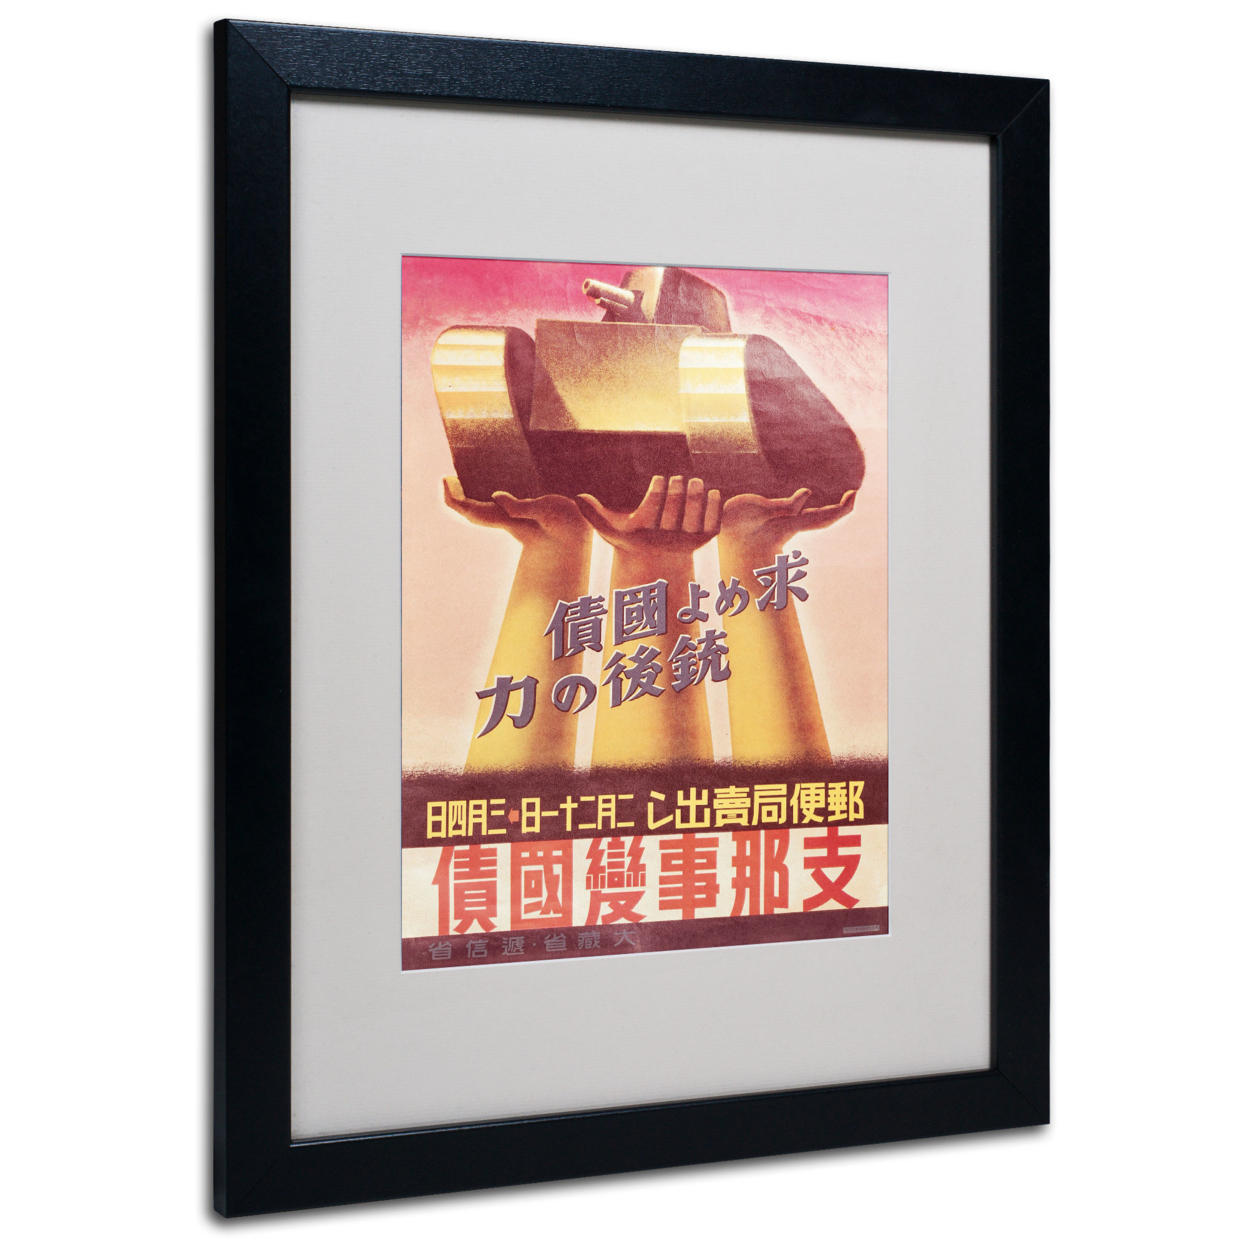 Second World War Propaganda Poster' Black Wooden Framed Art 18 X 22 Inches